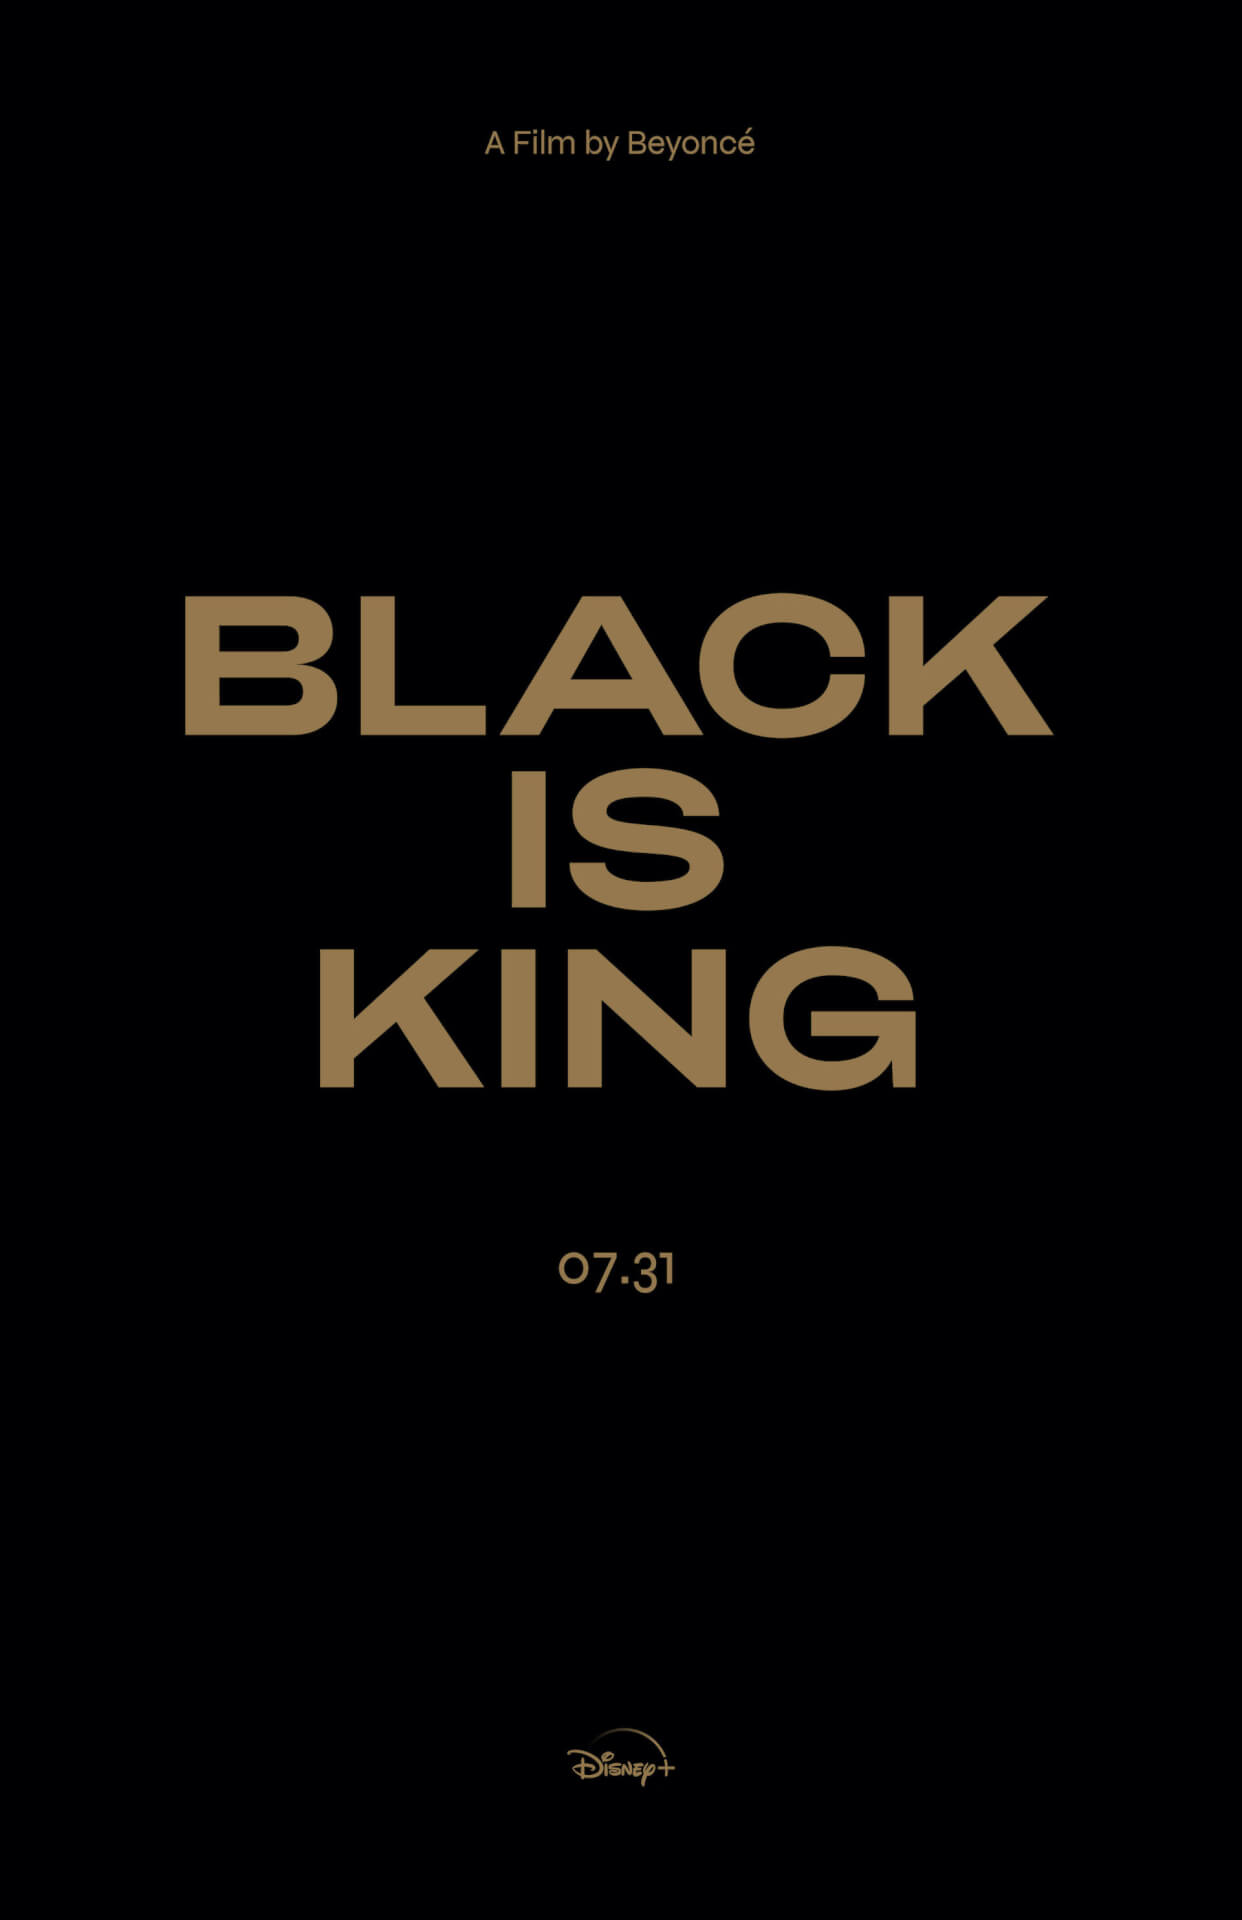 Beyoncéのビジュアルアルバム『ブラック・イズ・キング』が「Disney＋」限定で世界同時配信決定！ ac200716_blackisking_02